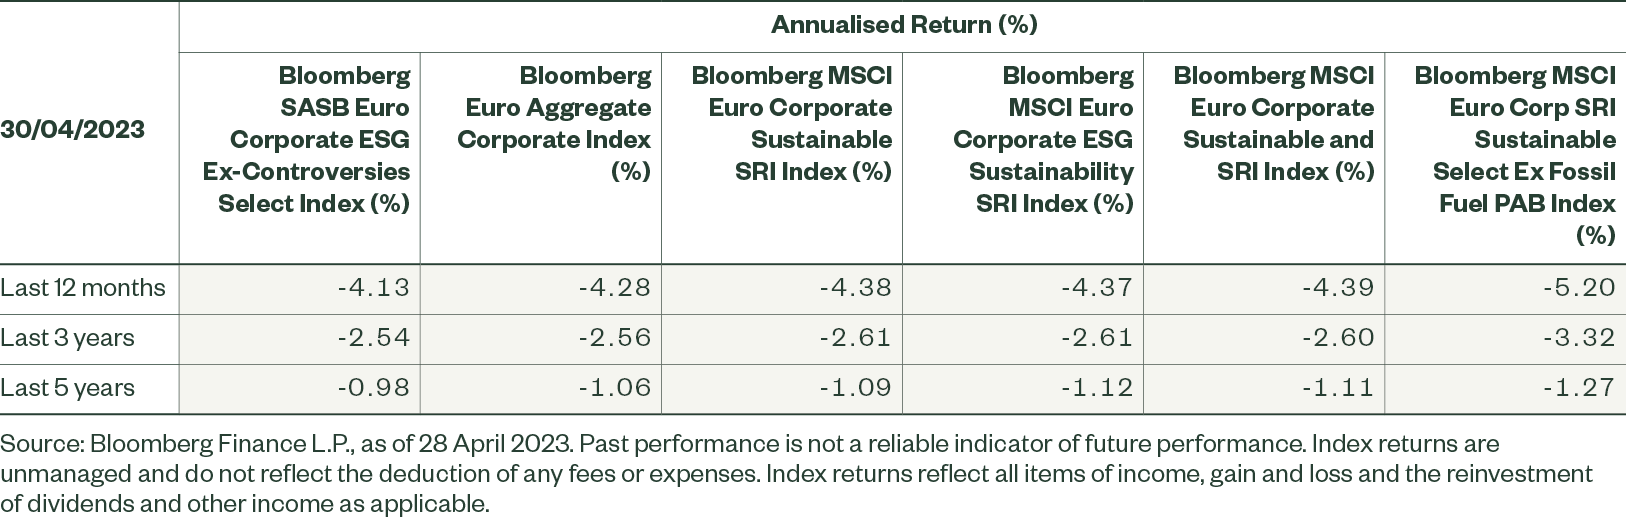 figure1-investment-grade